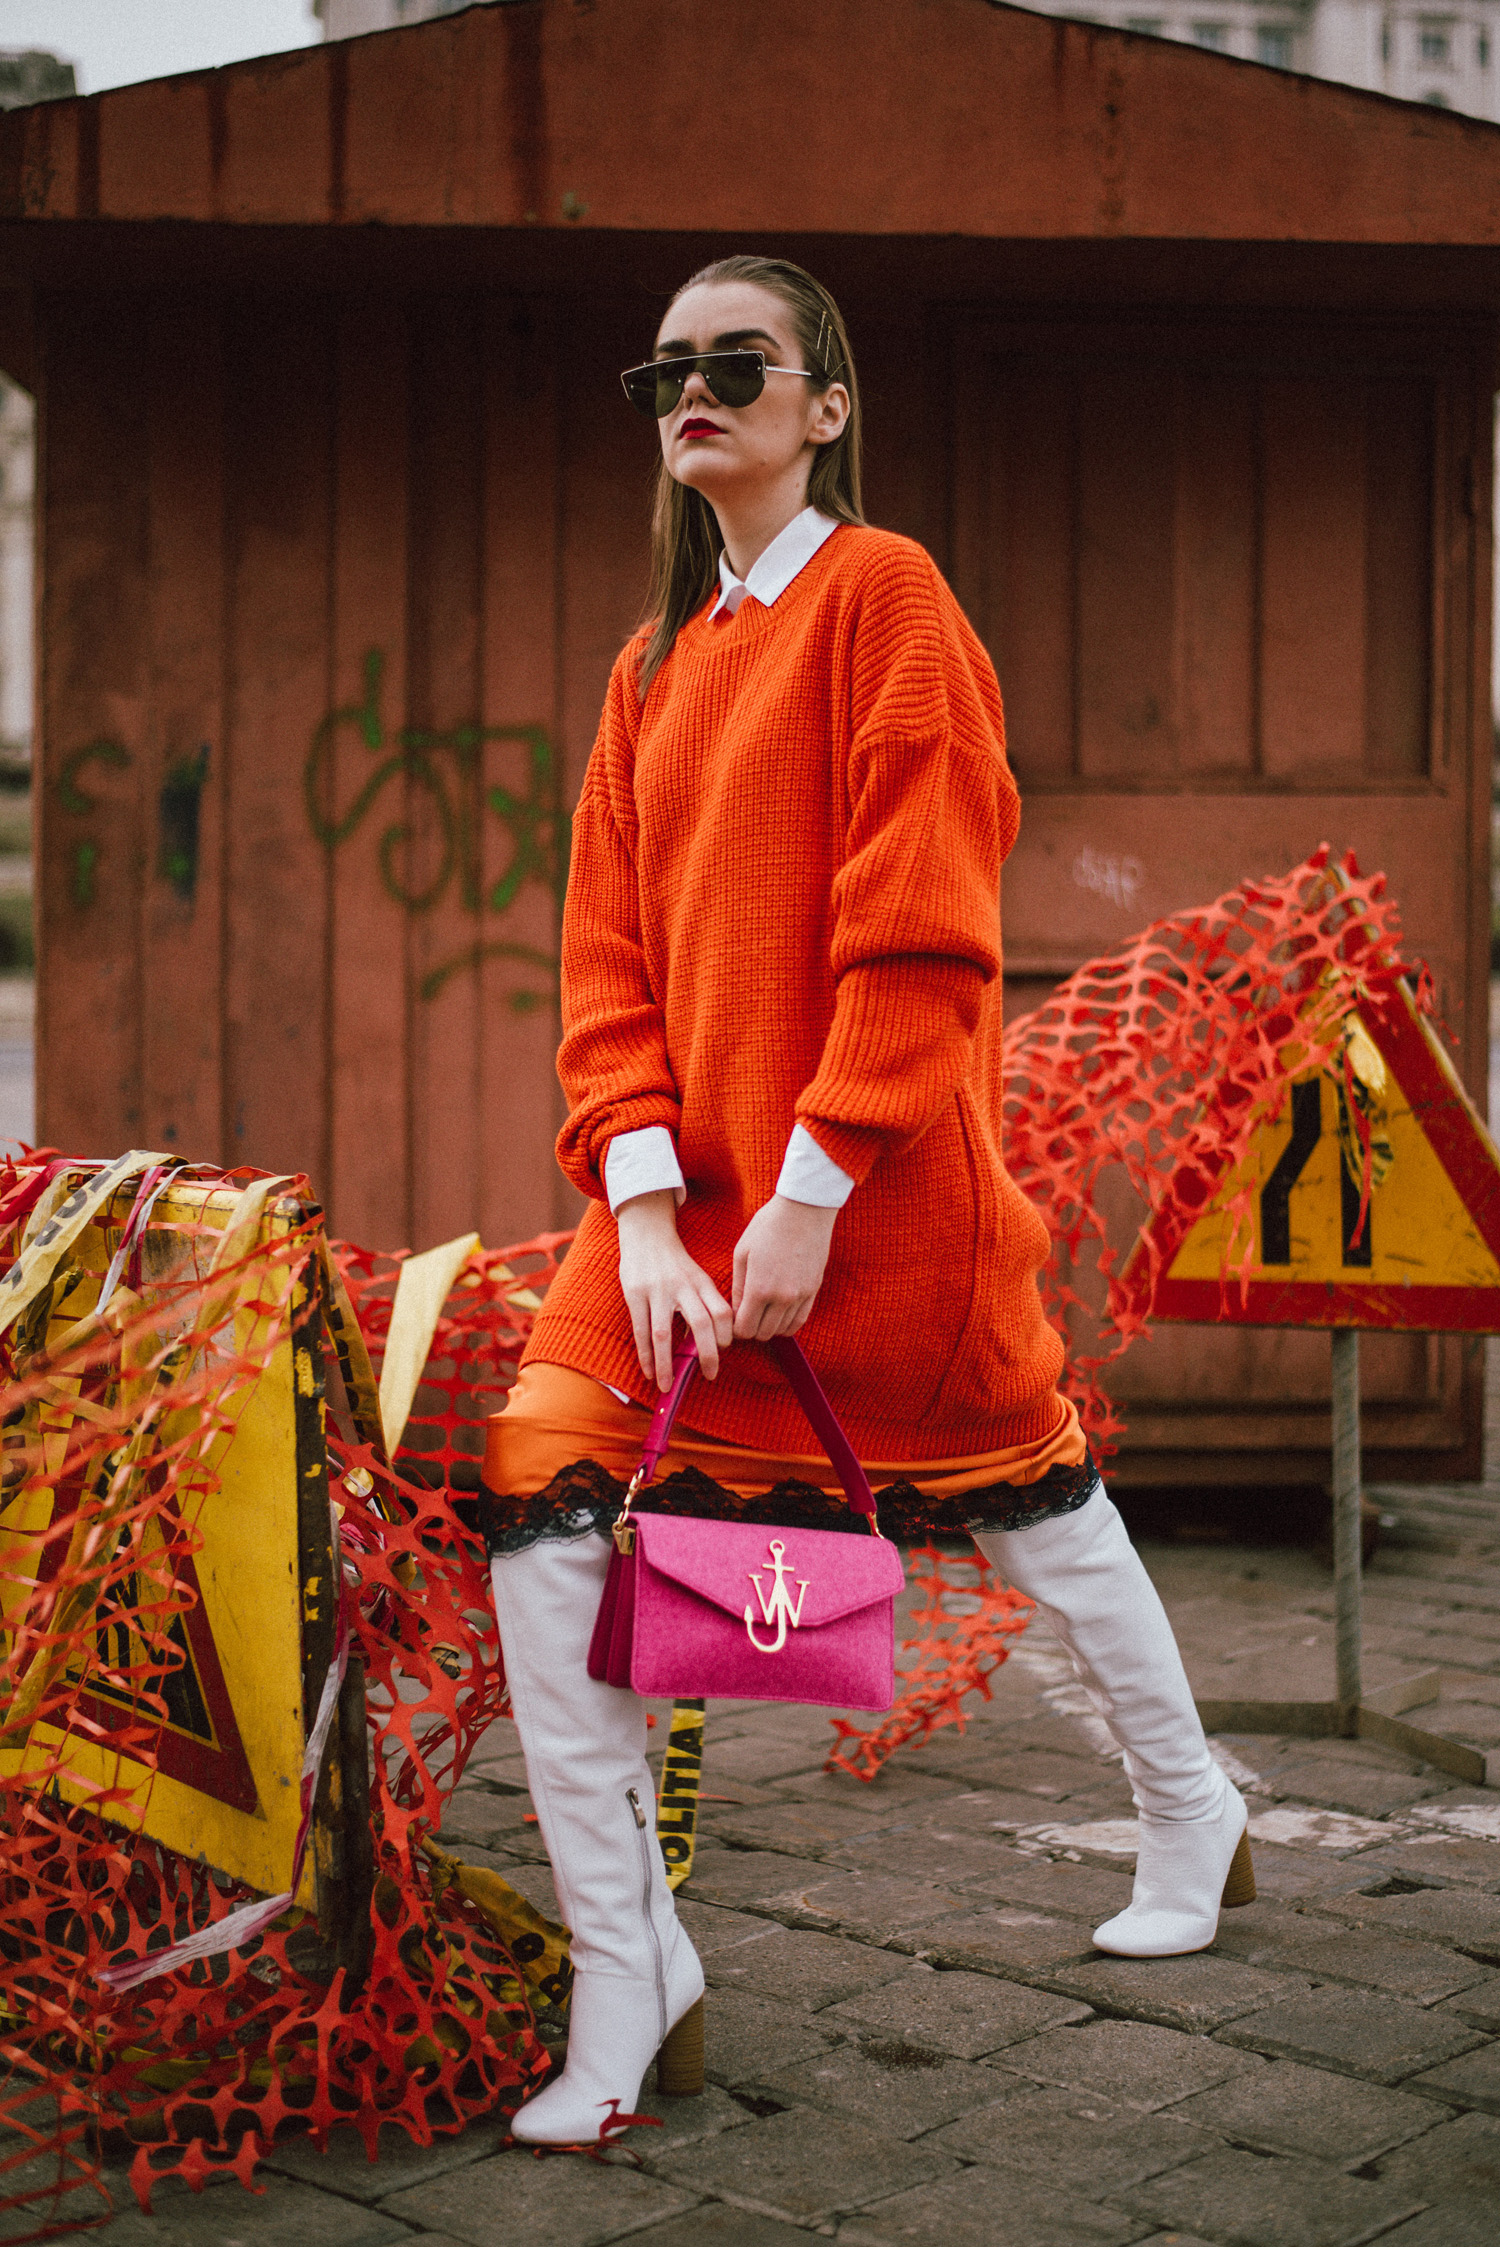 Pinko orange midi skirt orange sweater dress pink jw anderson bag white over the knee boots andreea birsan street style couturezilla cute winter outfit ideas 2019 11